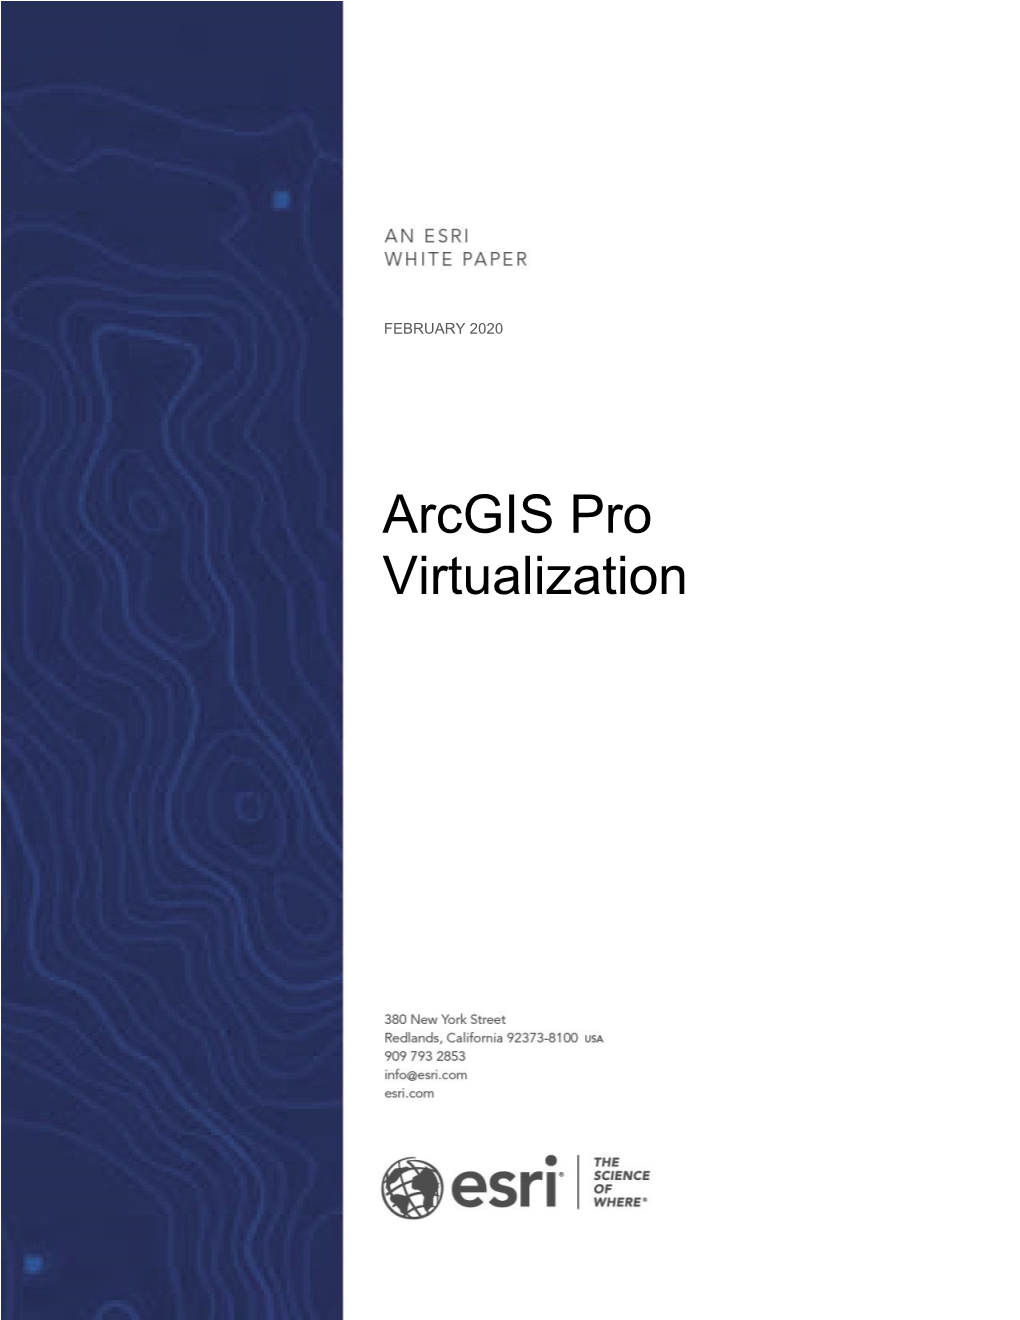 Virtualization of Arcgis Pro Off the Shelf